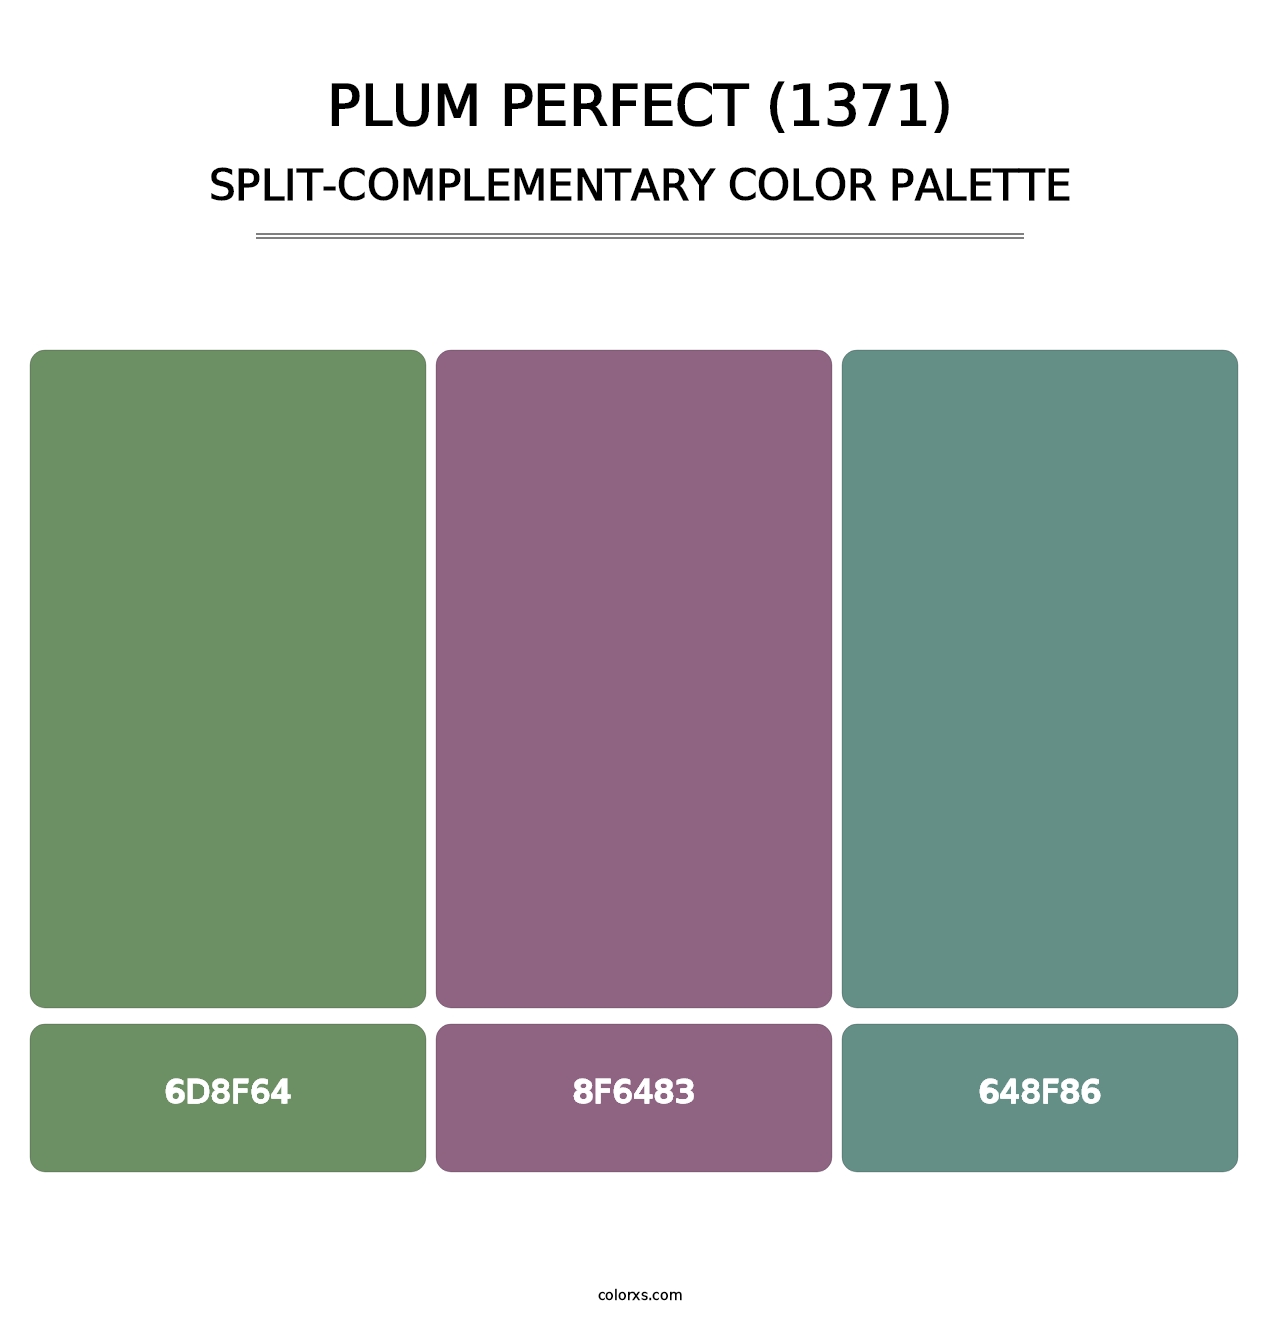 Plum Perfect (1371) - Split-Complementary Color Palette